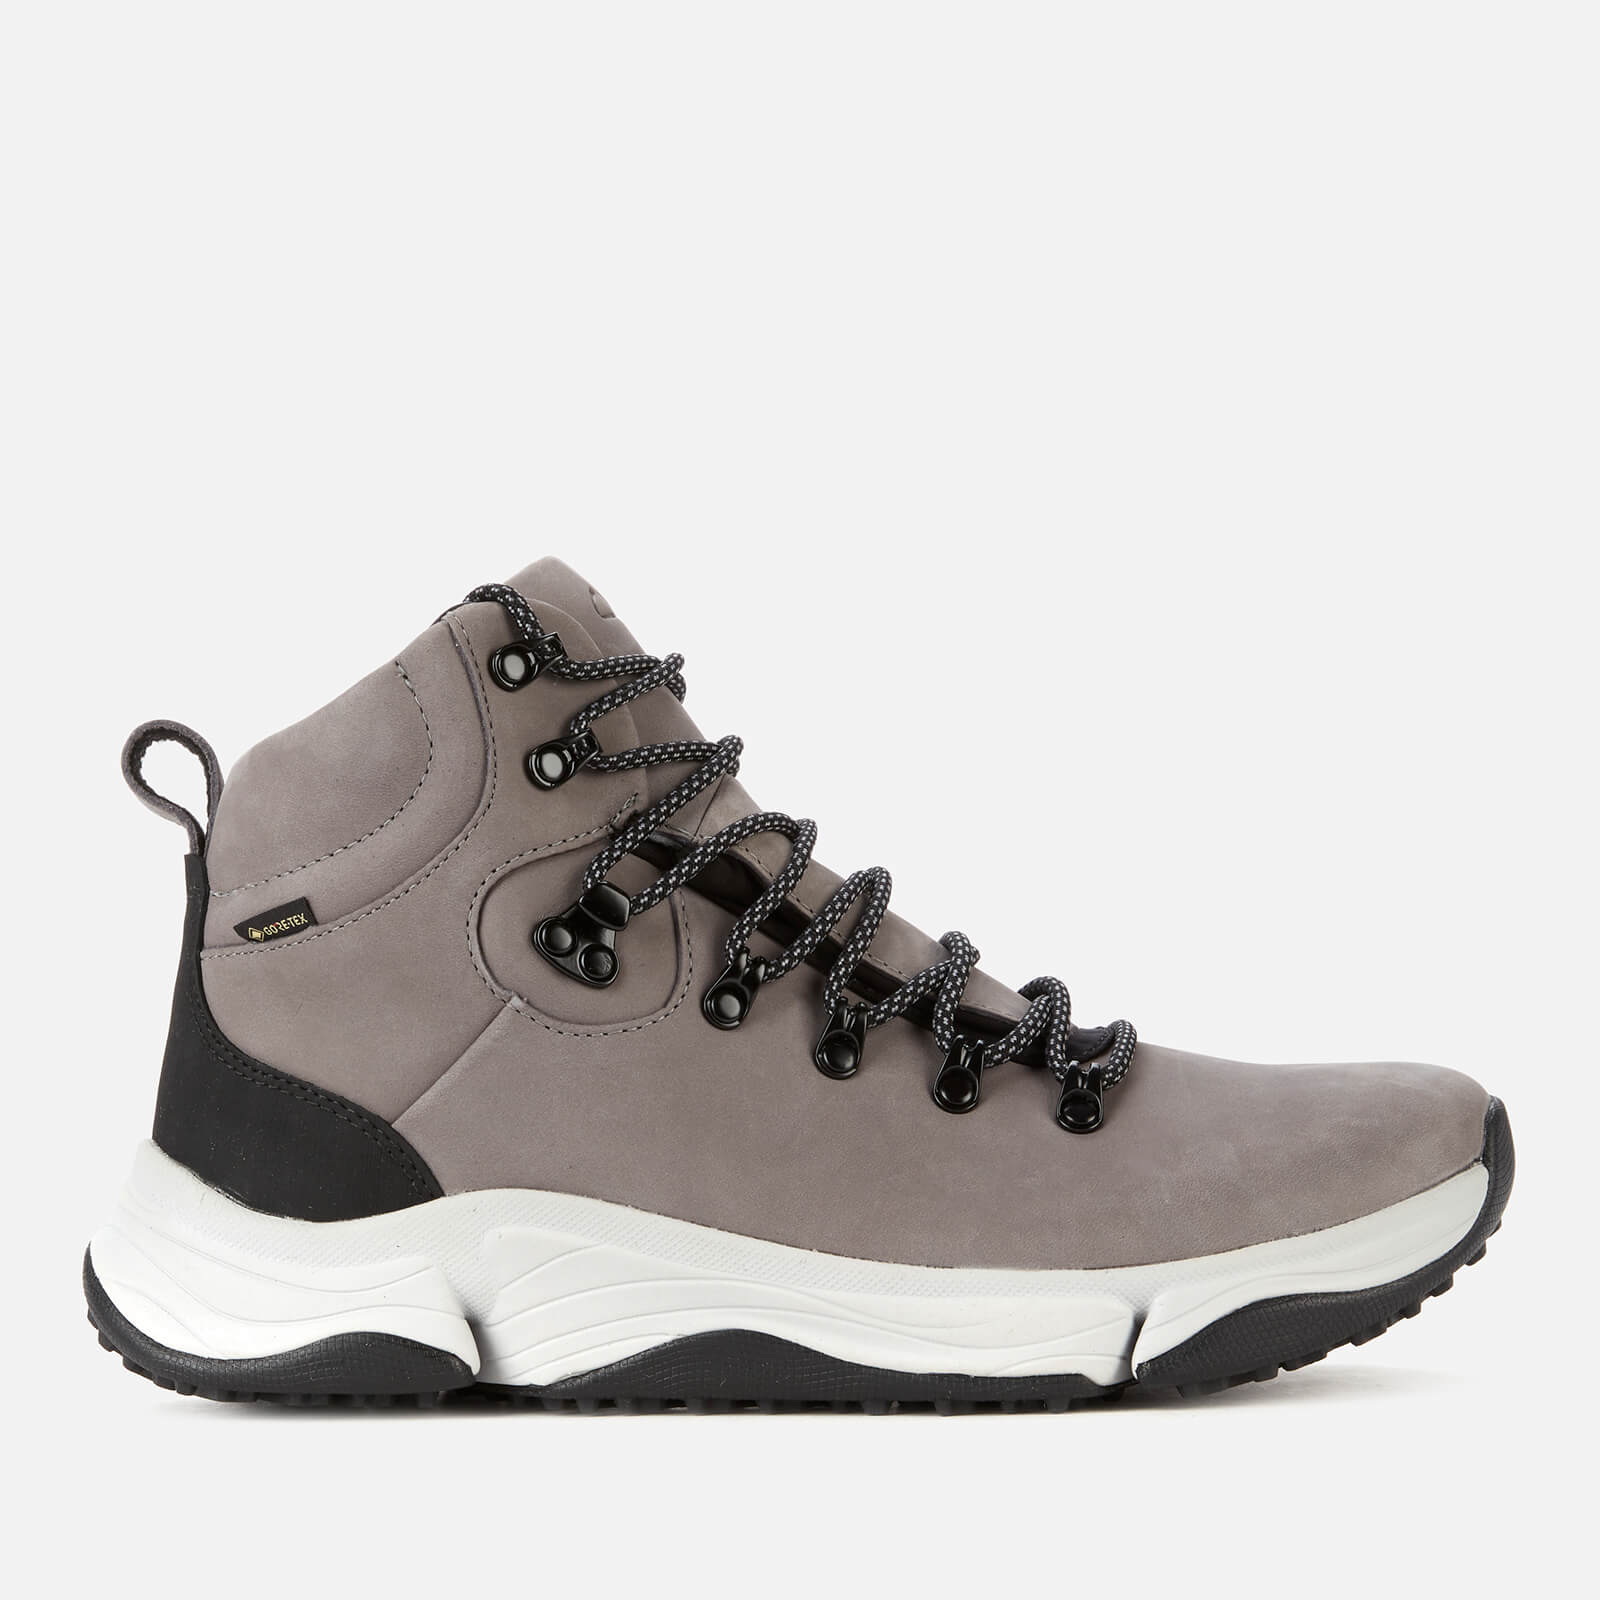 Clarks Men's Tripath Hi Goretex Hiking Style Boots - Grey Combi - Uk 10